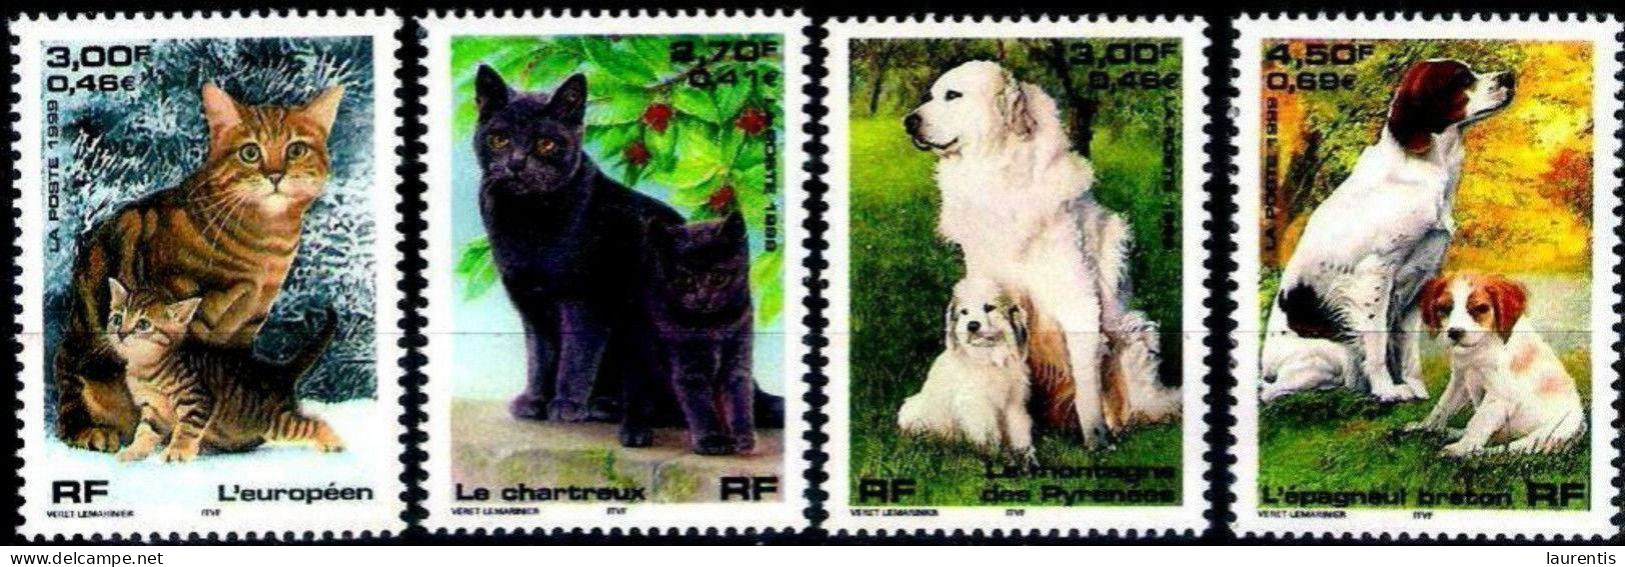 222  Cats - Chats - Dogs - Chiens - France 1999 - MNH - 2,25 - Hauskatzen